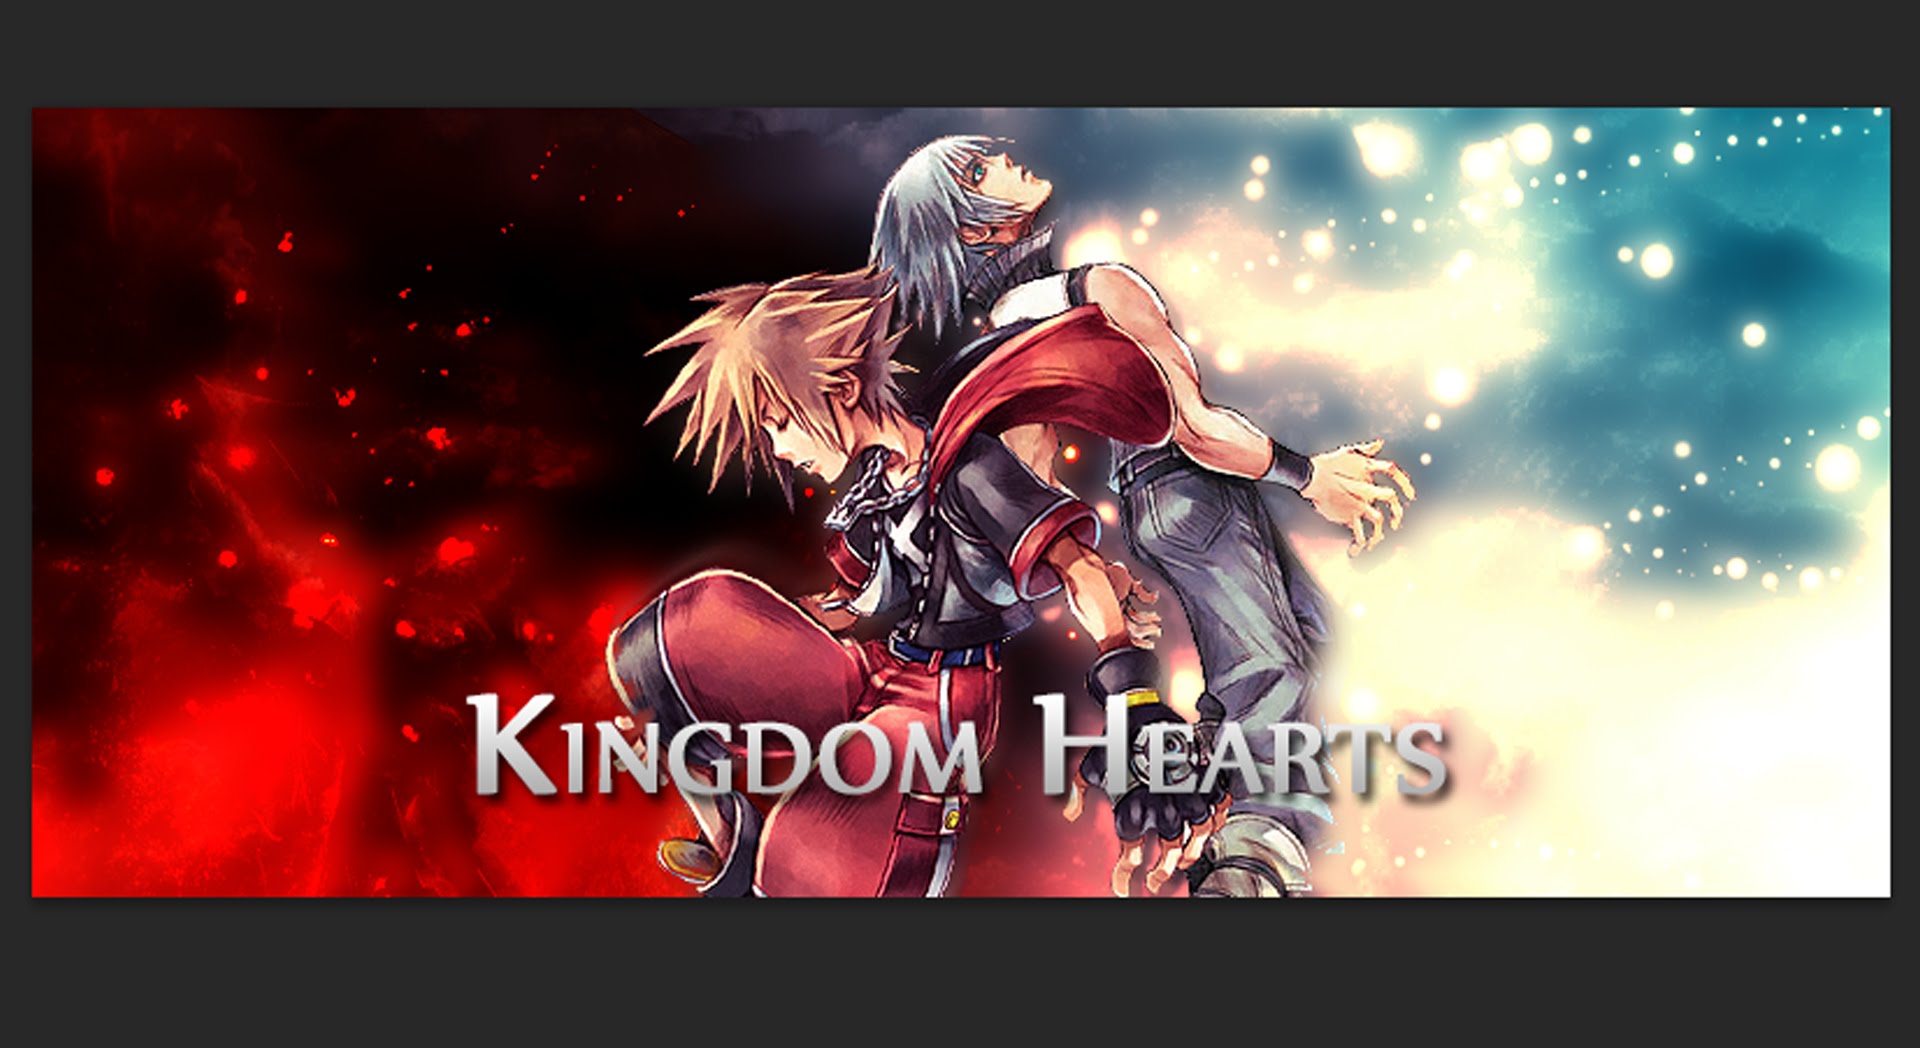 KINGDOM HEARTS: Sora & Riku Wallpaper Speedart | by KayPi - YouTube